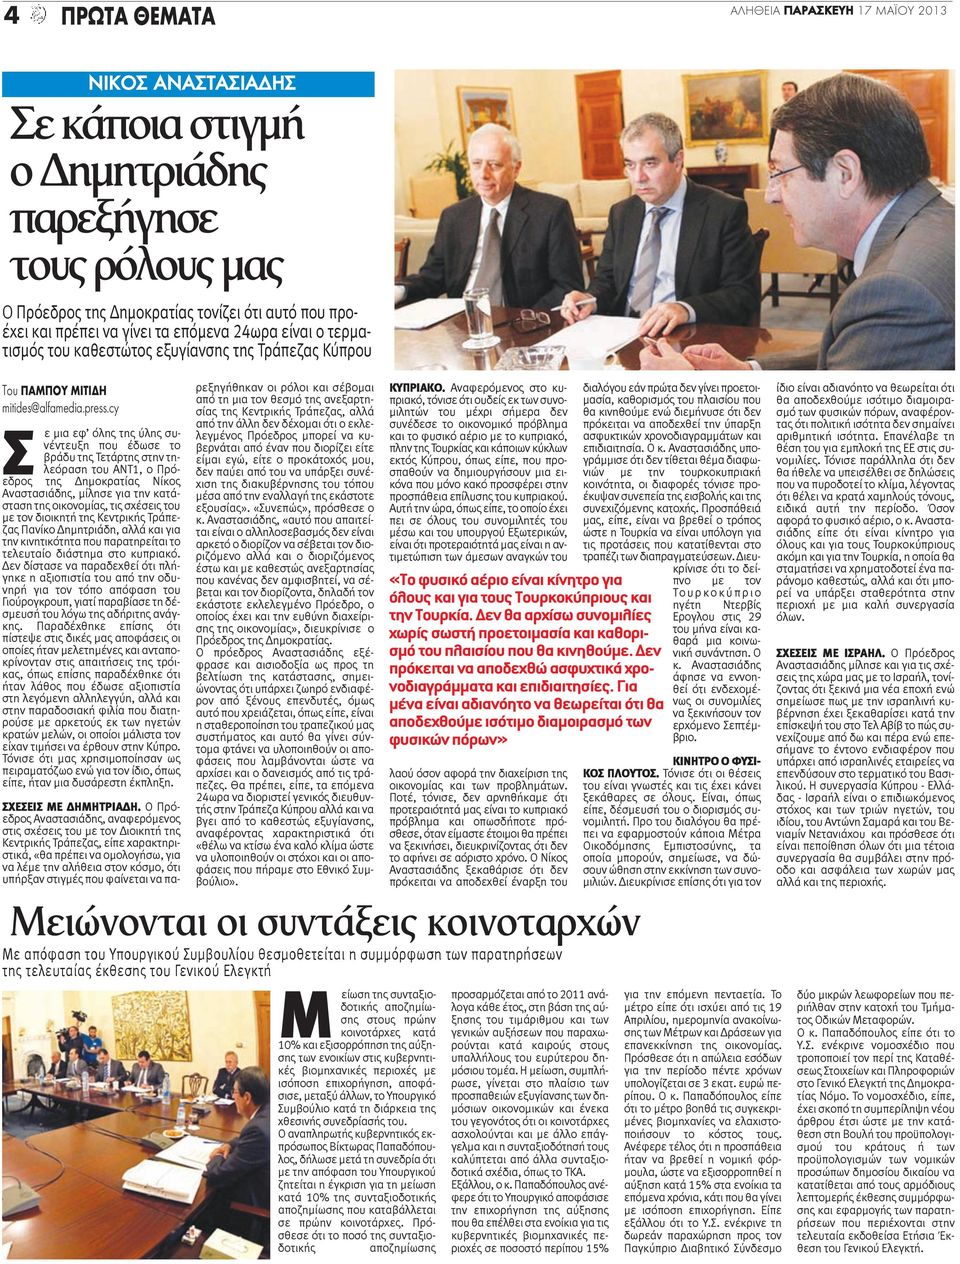 cy Σ ε μια εφ όλης της ύλης συνέντευξη που έδωσε το βράδυ της Τετάρτης στην τηλεόραση του ΑΝΤ1, ο Πρόεδρος της Δημοκρατίας Νίκος Αναστασιάδης, μίλησε για την κατάσταση της οικονομίας, τις σχέσεις του